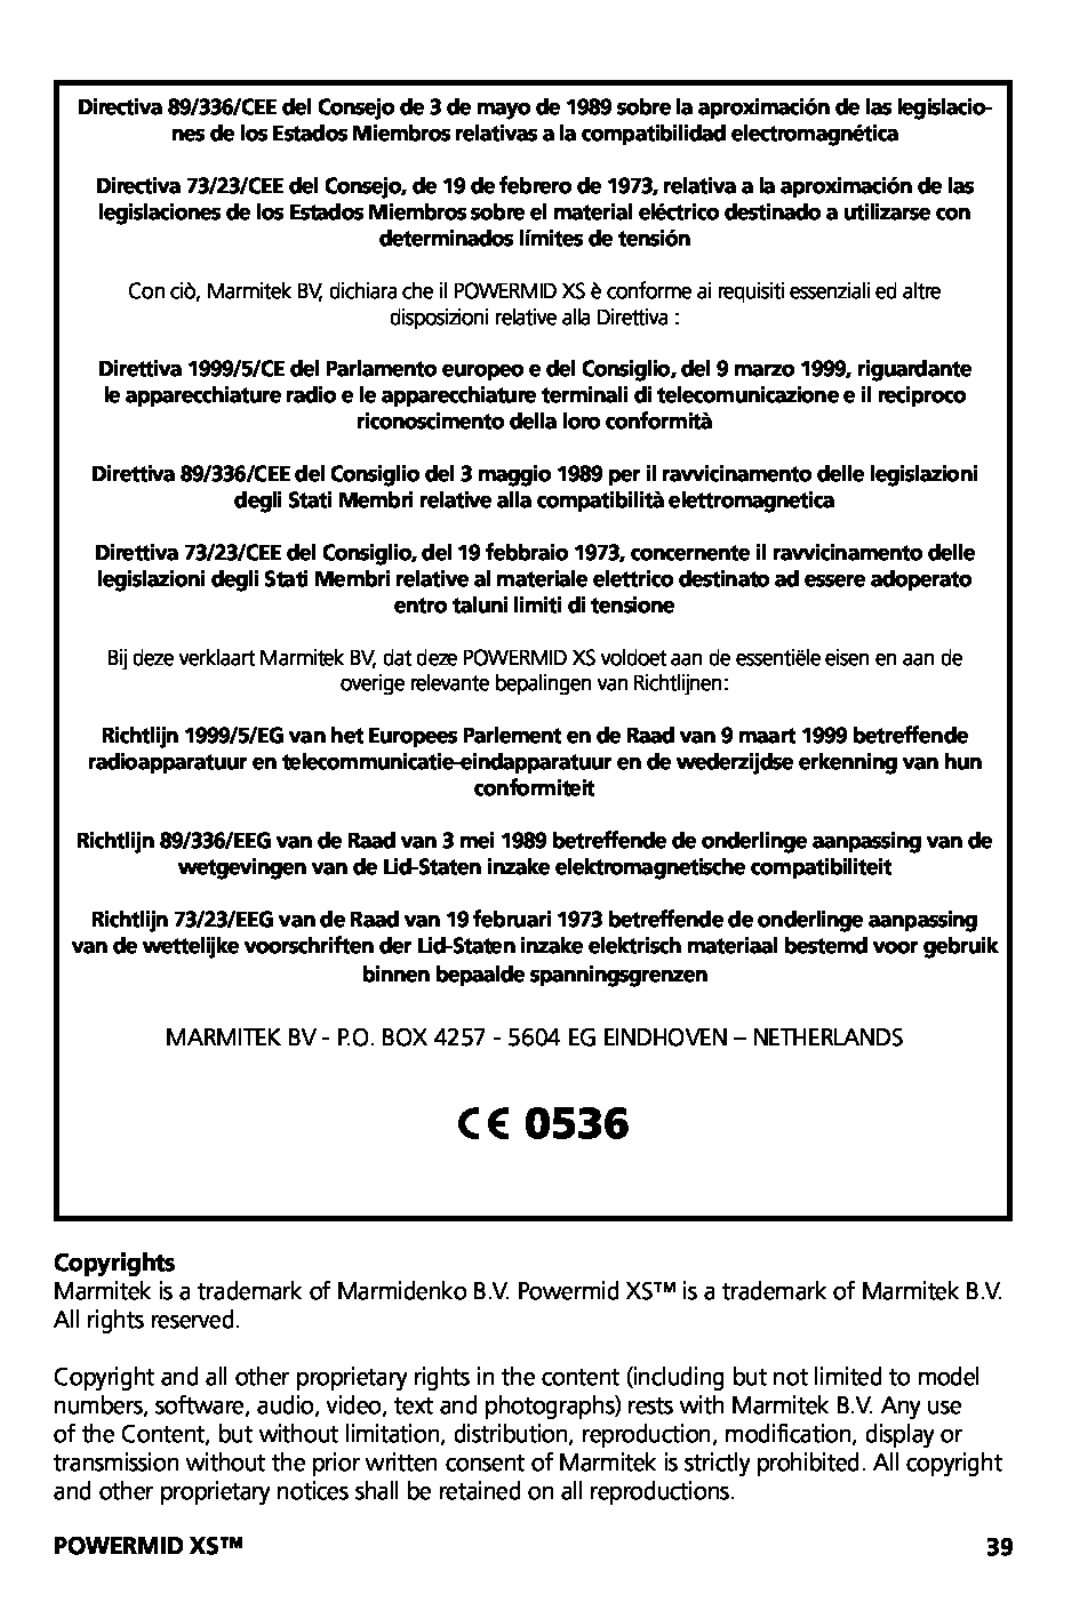 Marmitek XS user manual 0536, MARMITEK BV - P.O. BOX 4257 - 5604 EG EINDHOVEN - NETHERLANDS, Copyrights, Powermid Xs 